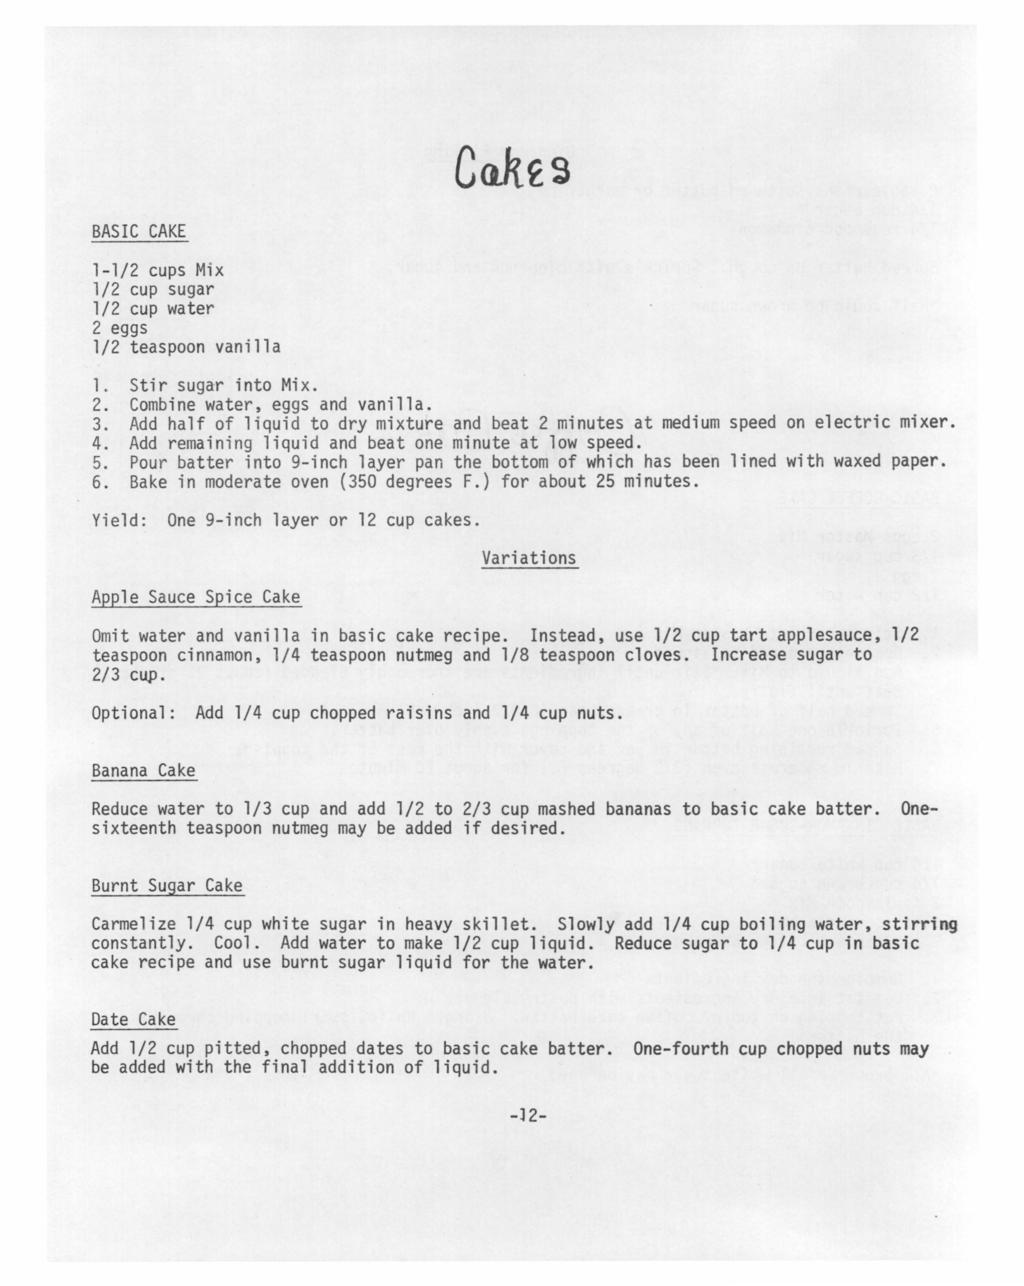 BASIC CAKE 1-1/2 cups Mix 1/2 cup sugar 1/2 cup water 2 eggs 1/2 teaspoon vanilla 1. Stir sugar into Mix. 2. Combine water, eggs and vanilla. 3.